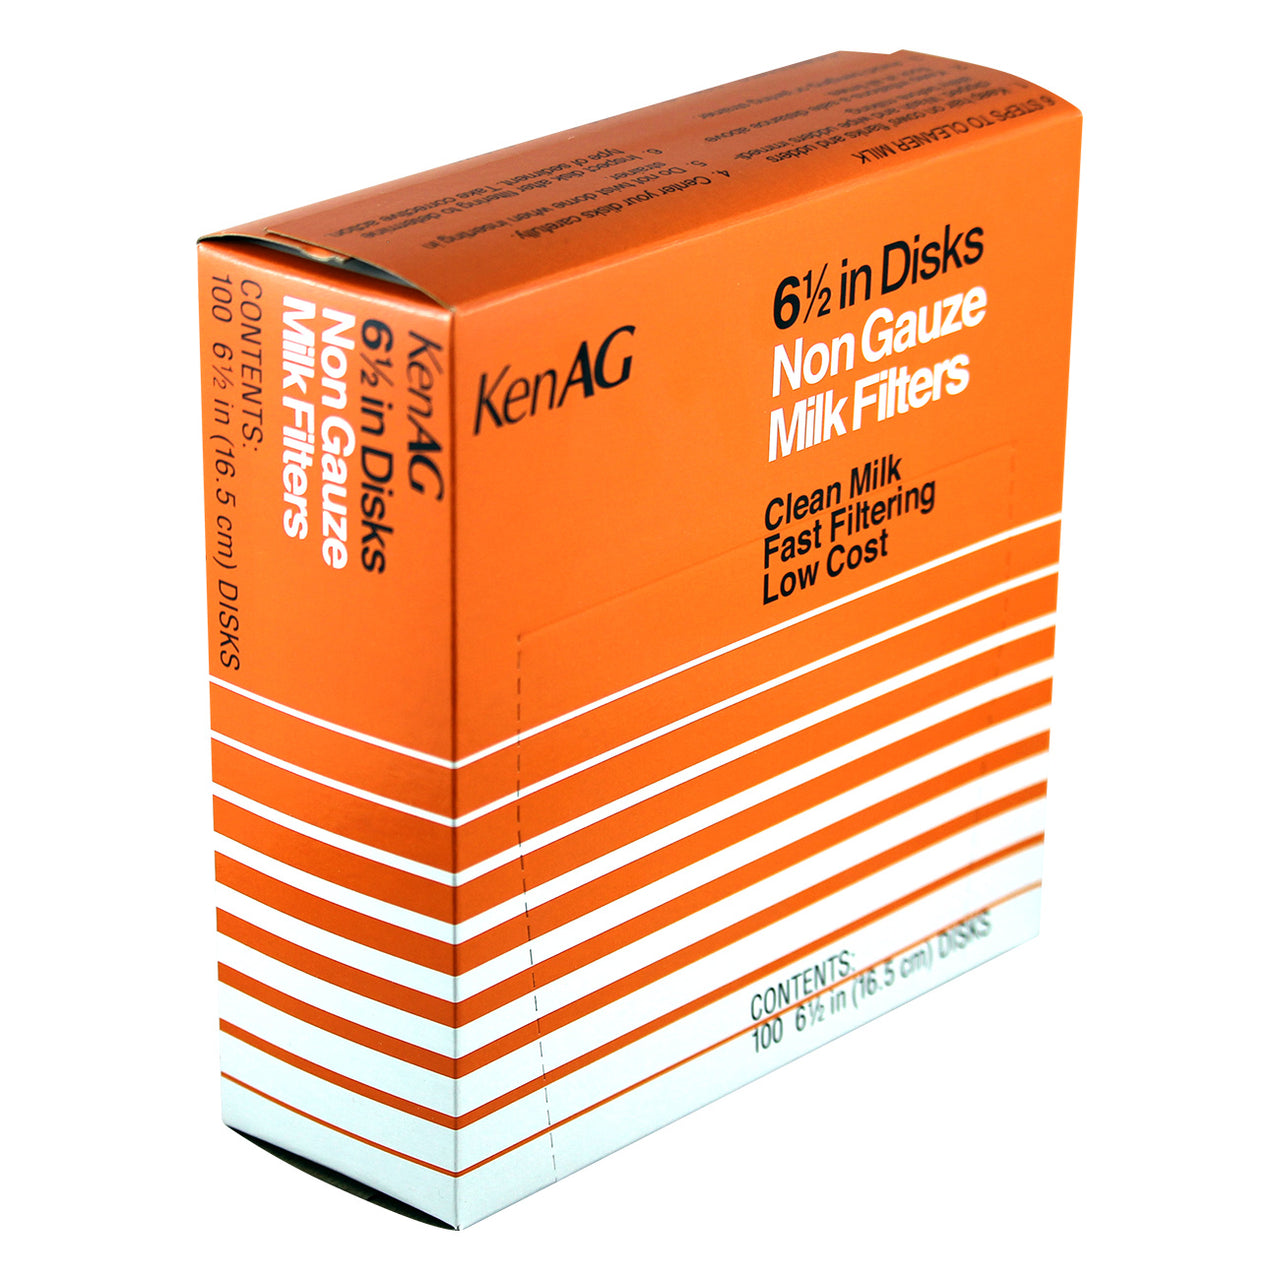 Kenag 6 1/2 Disk Milk Filters (100 Per Box) - Pet Suppies Kenag - Canada